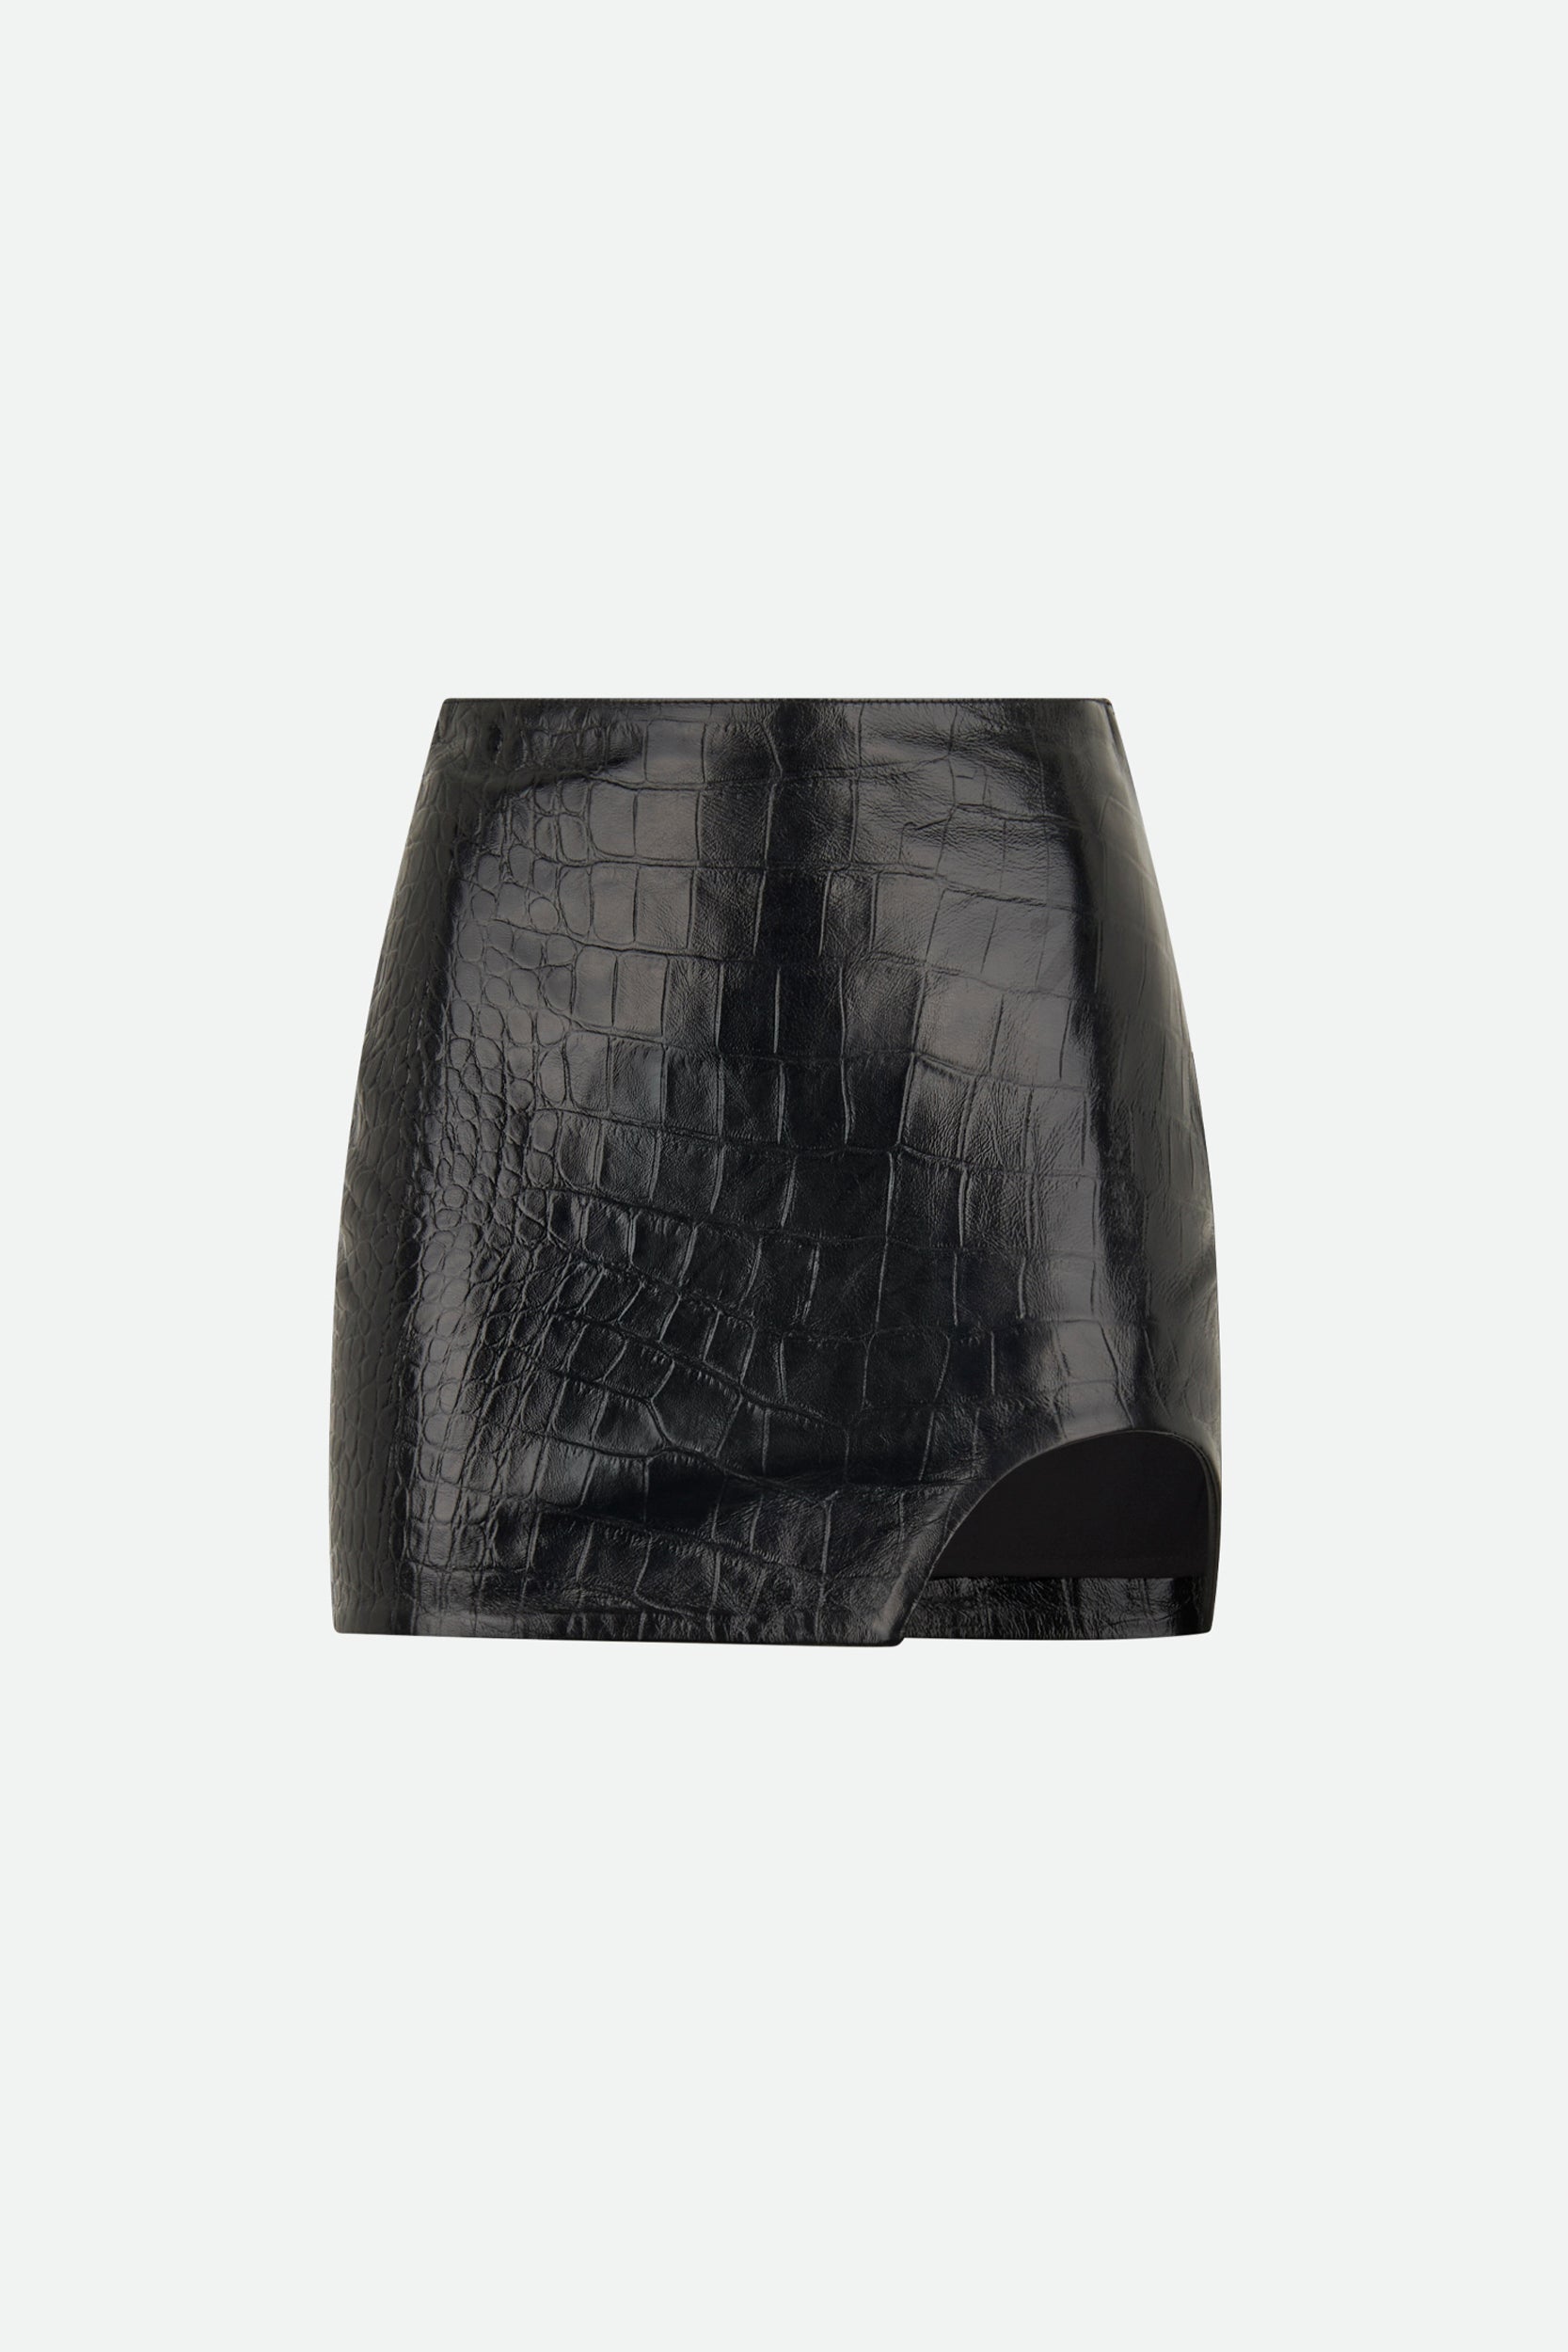 Patrizia Pepe Black Leather Skirt